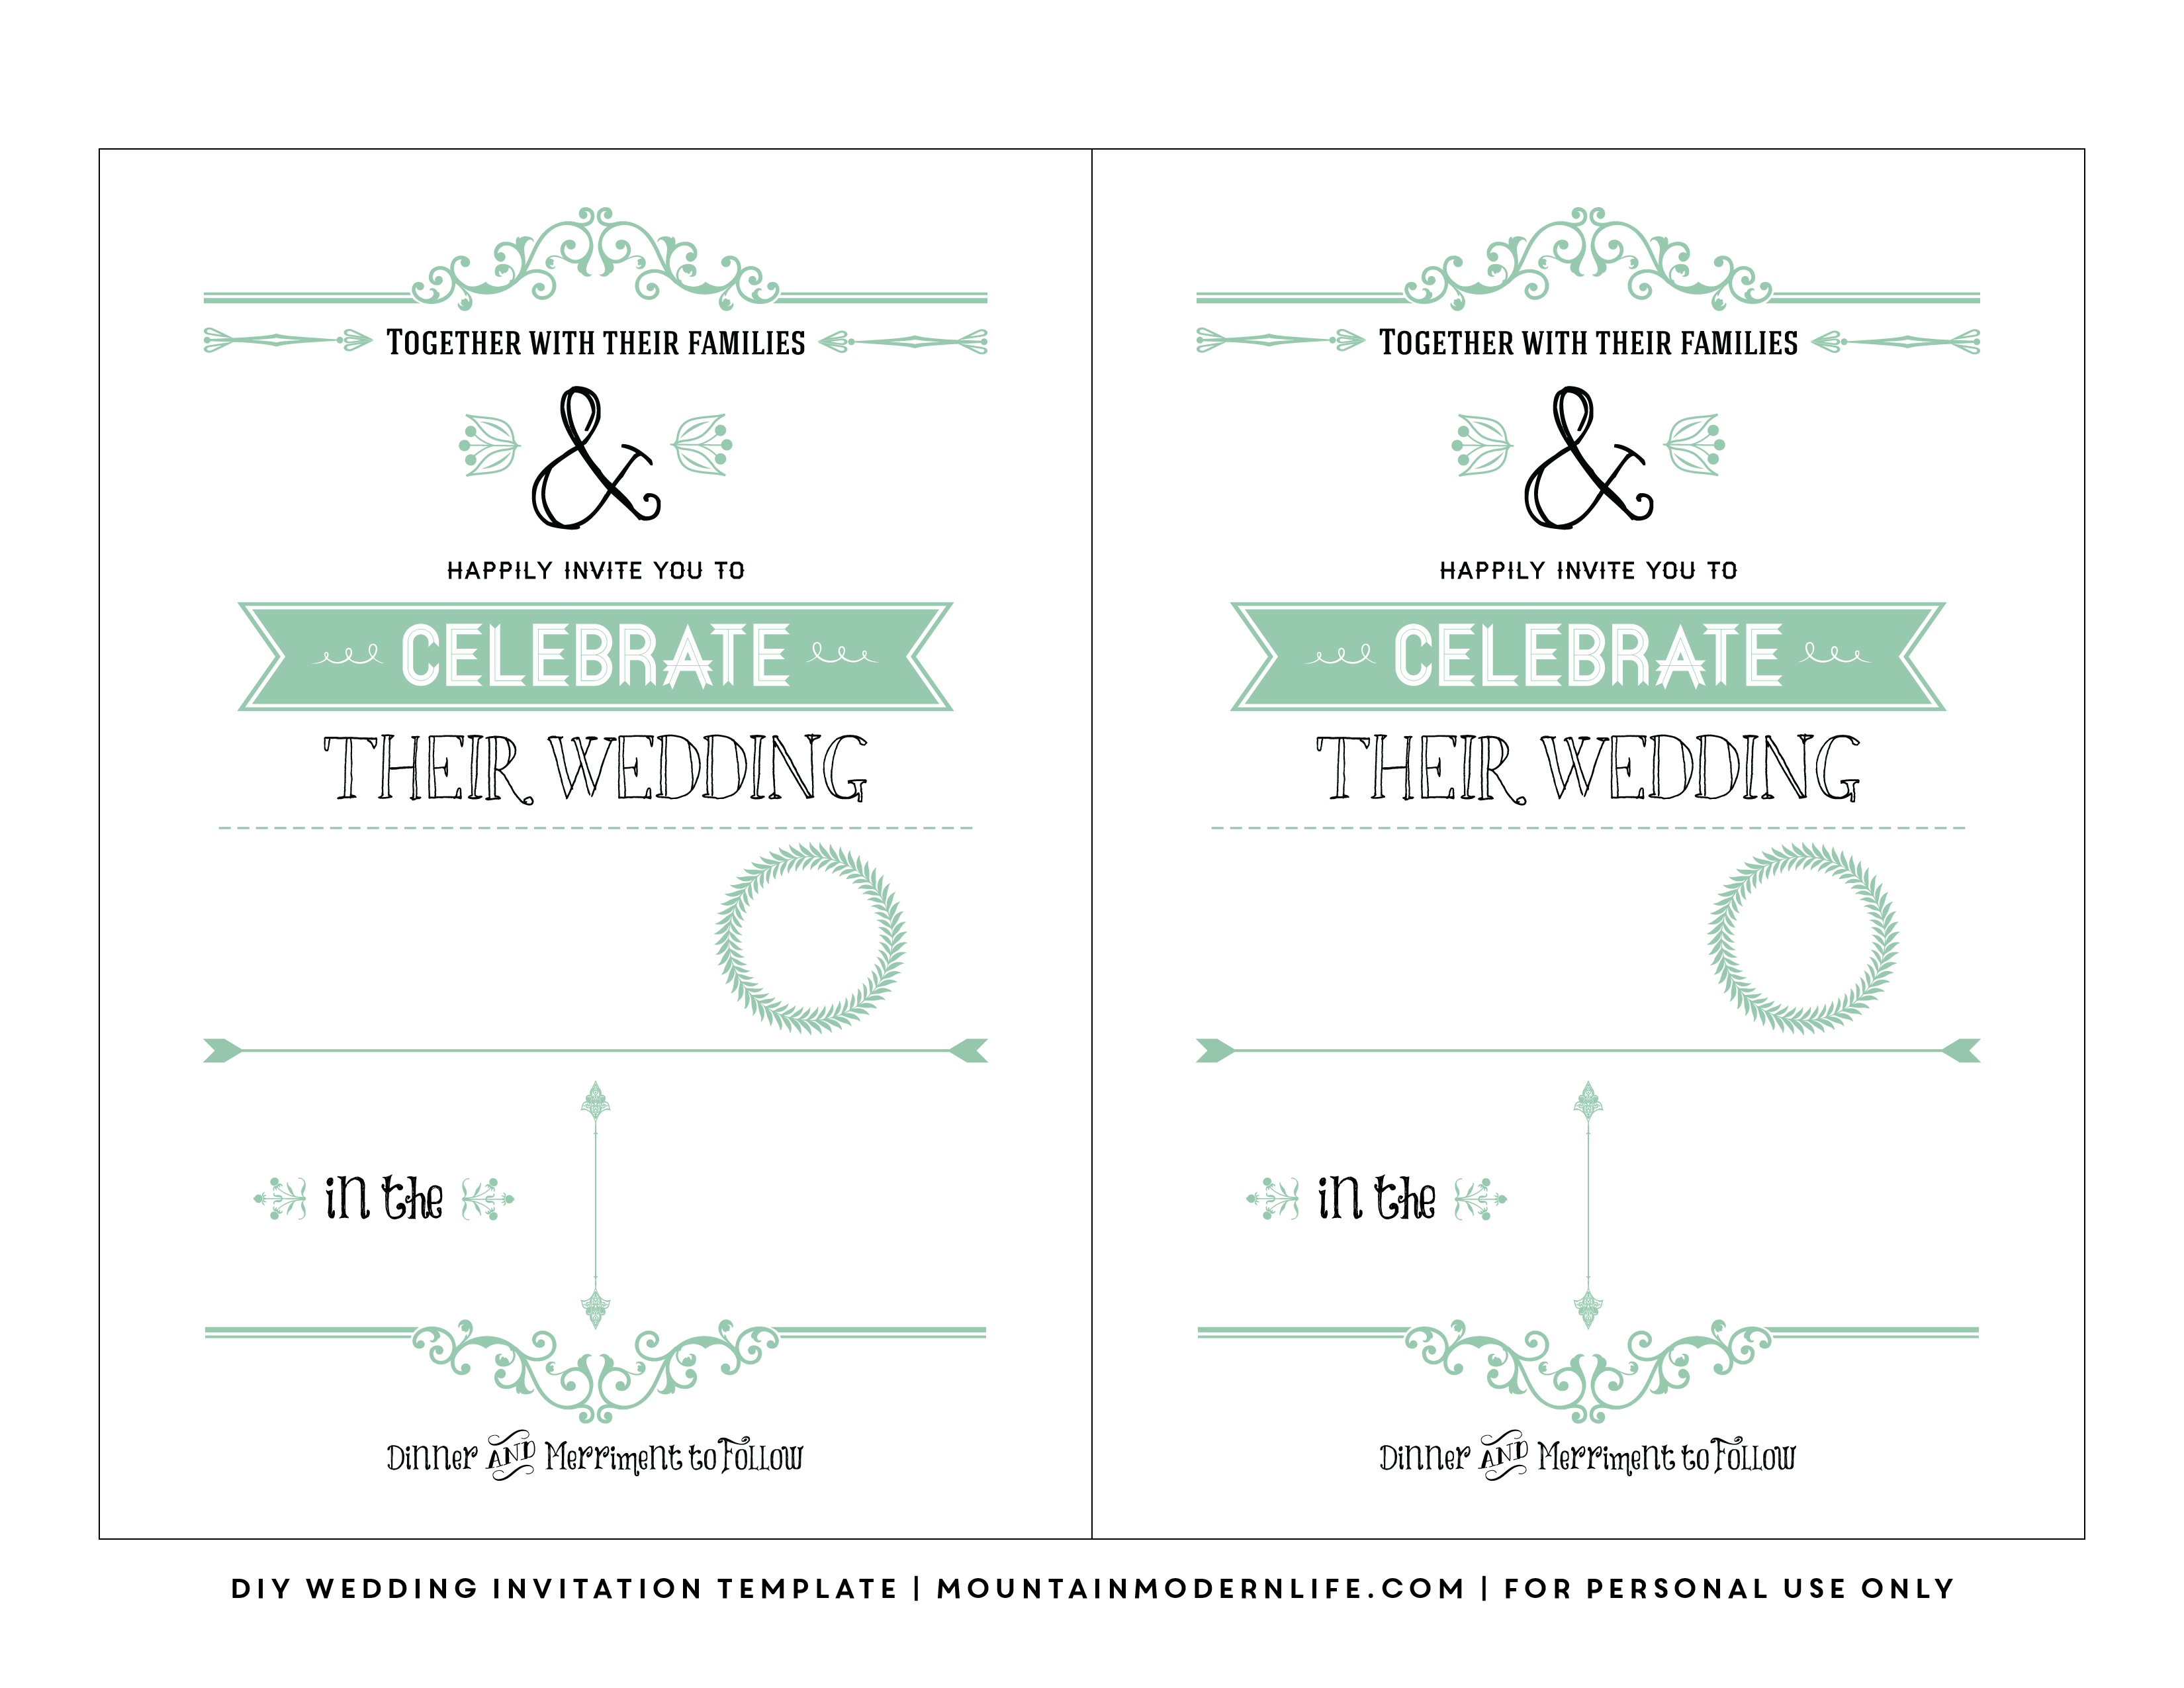 Free Wedding Invitation Template | Mountainmodernlife - Free Printable Wedding Invitation Templates